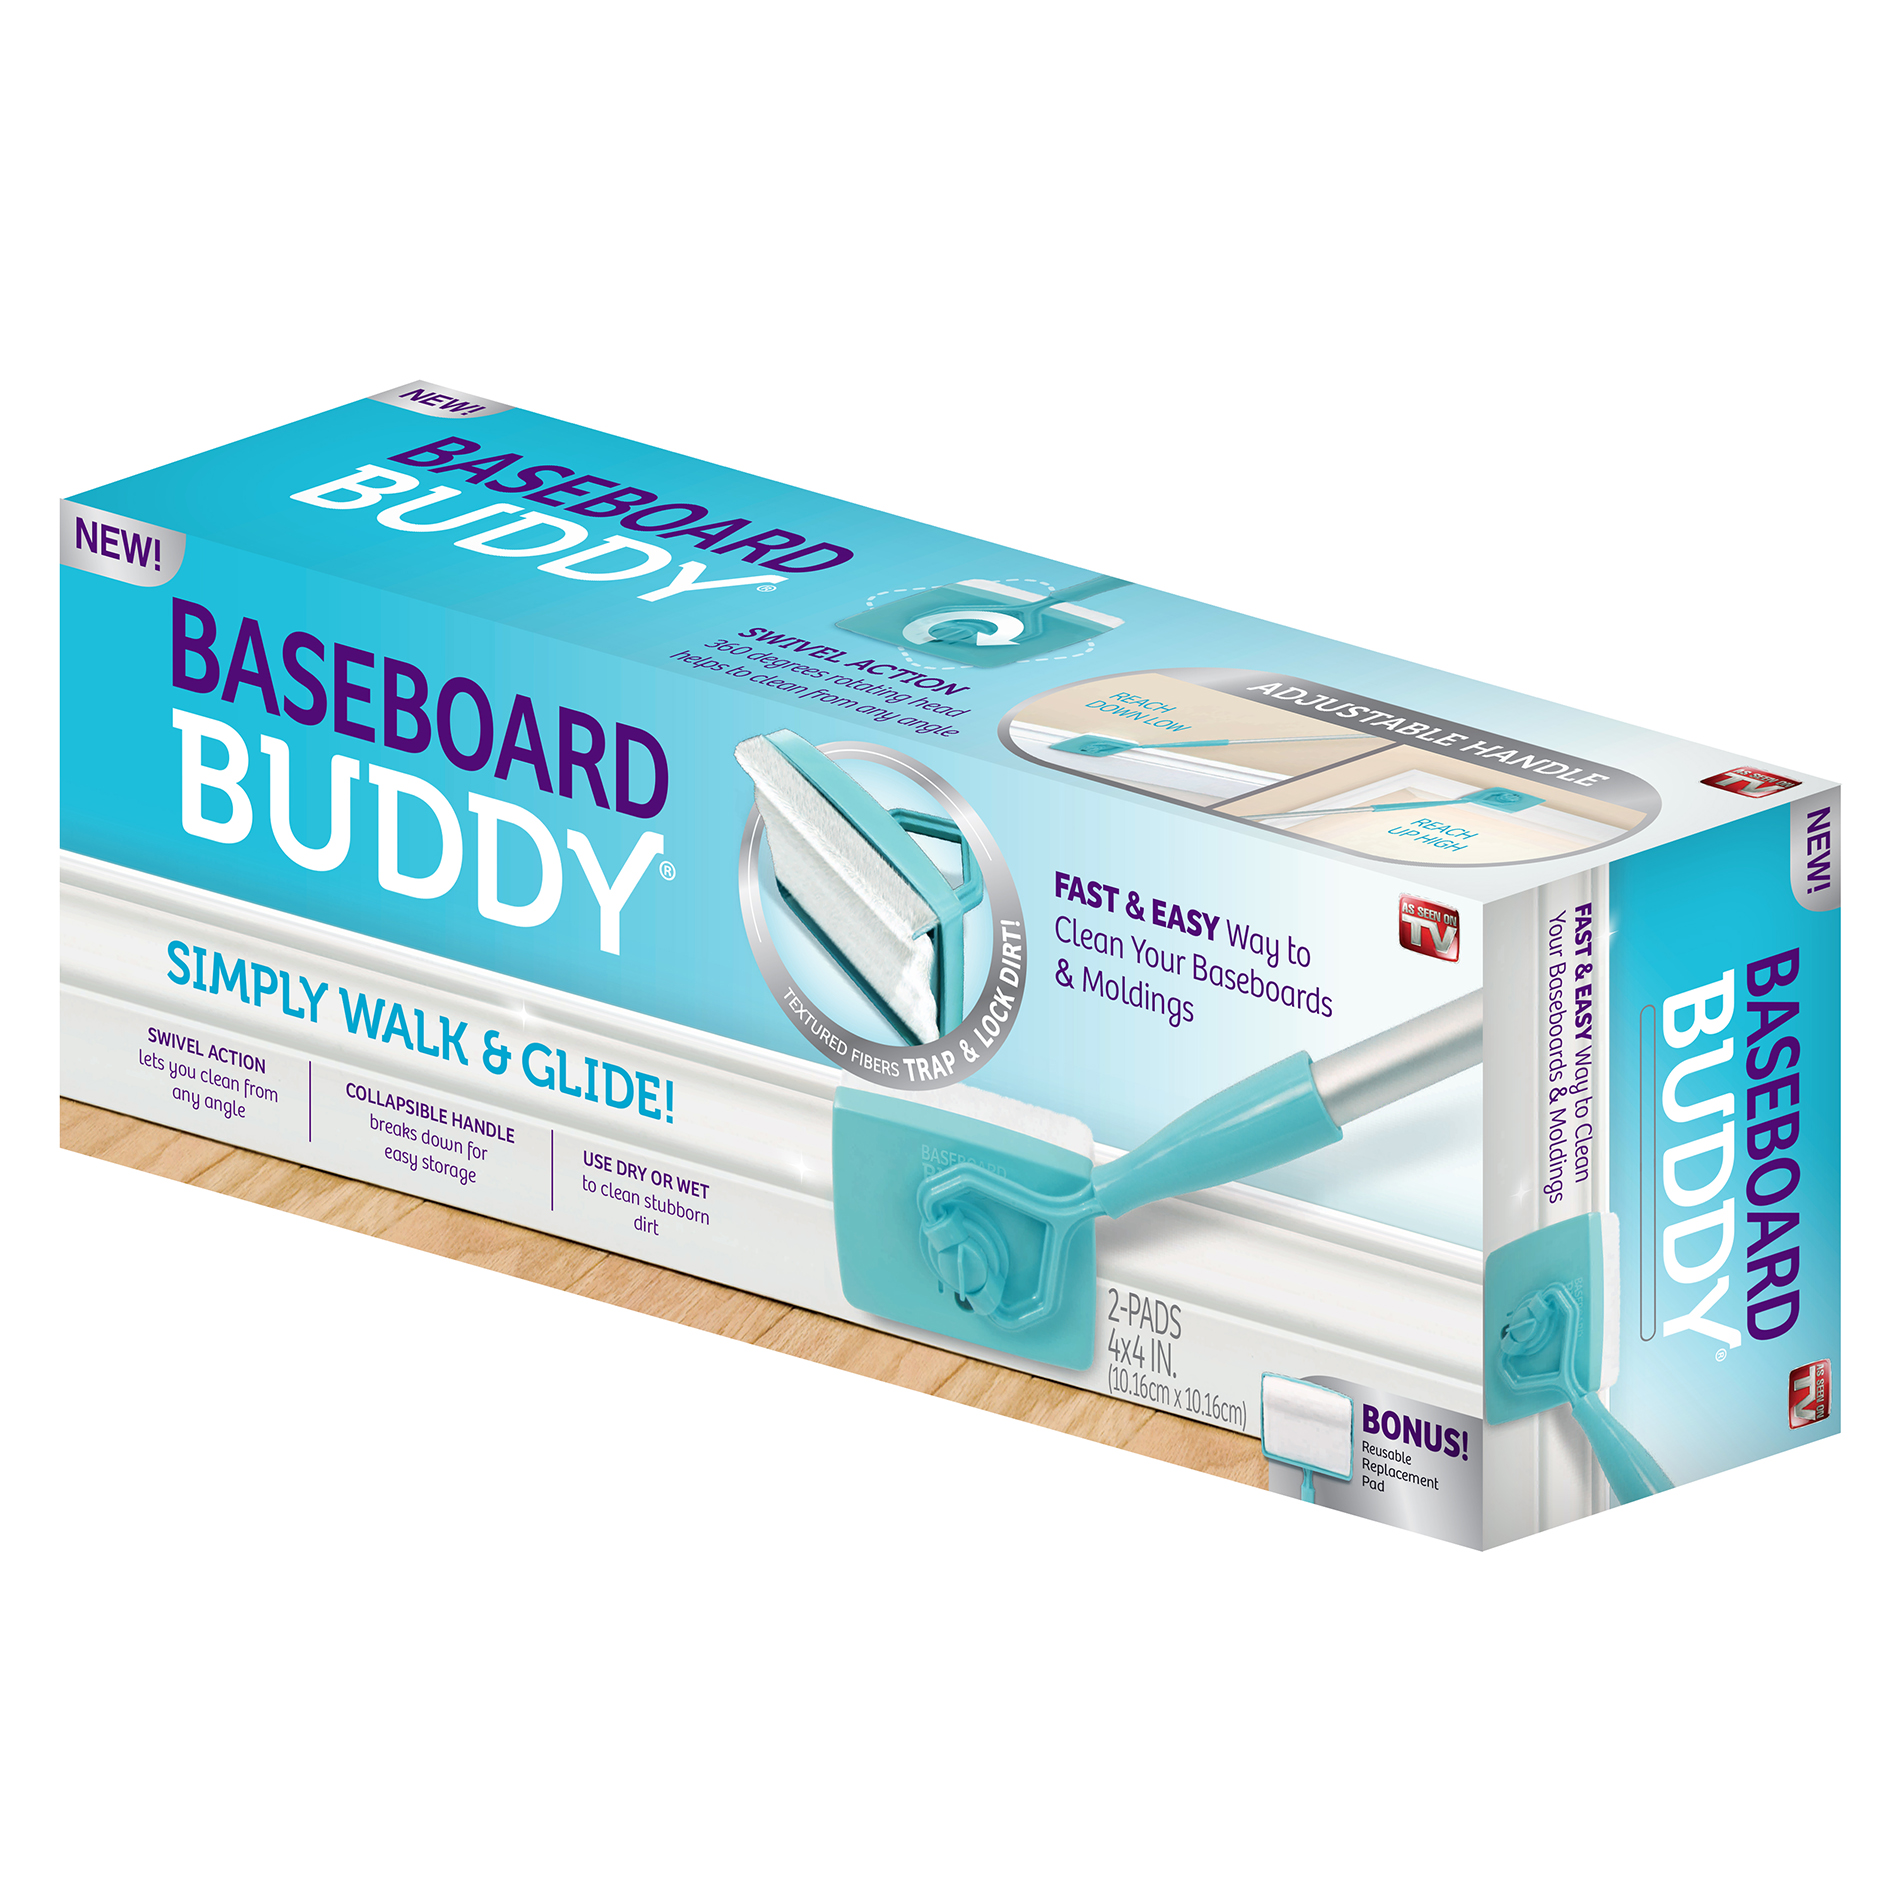 Baseboard Buddy Cleaning Mop Walk Glide Extendable Microfiber Dust